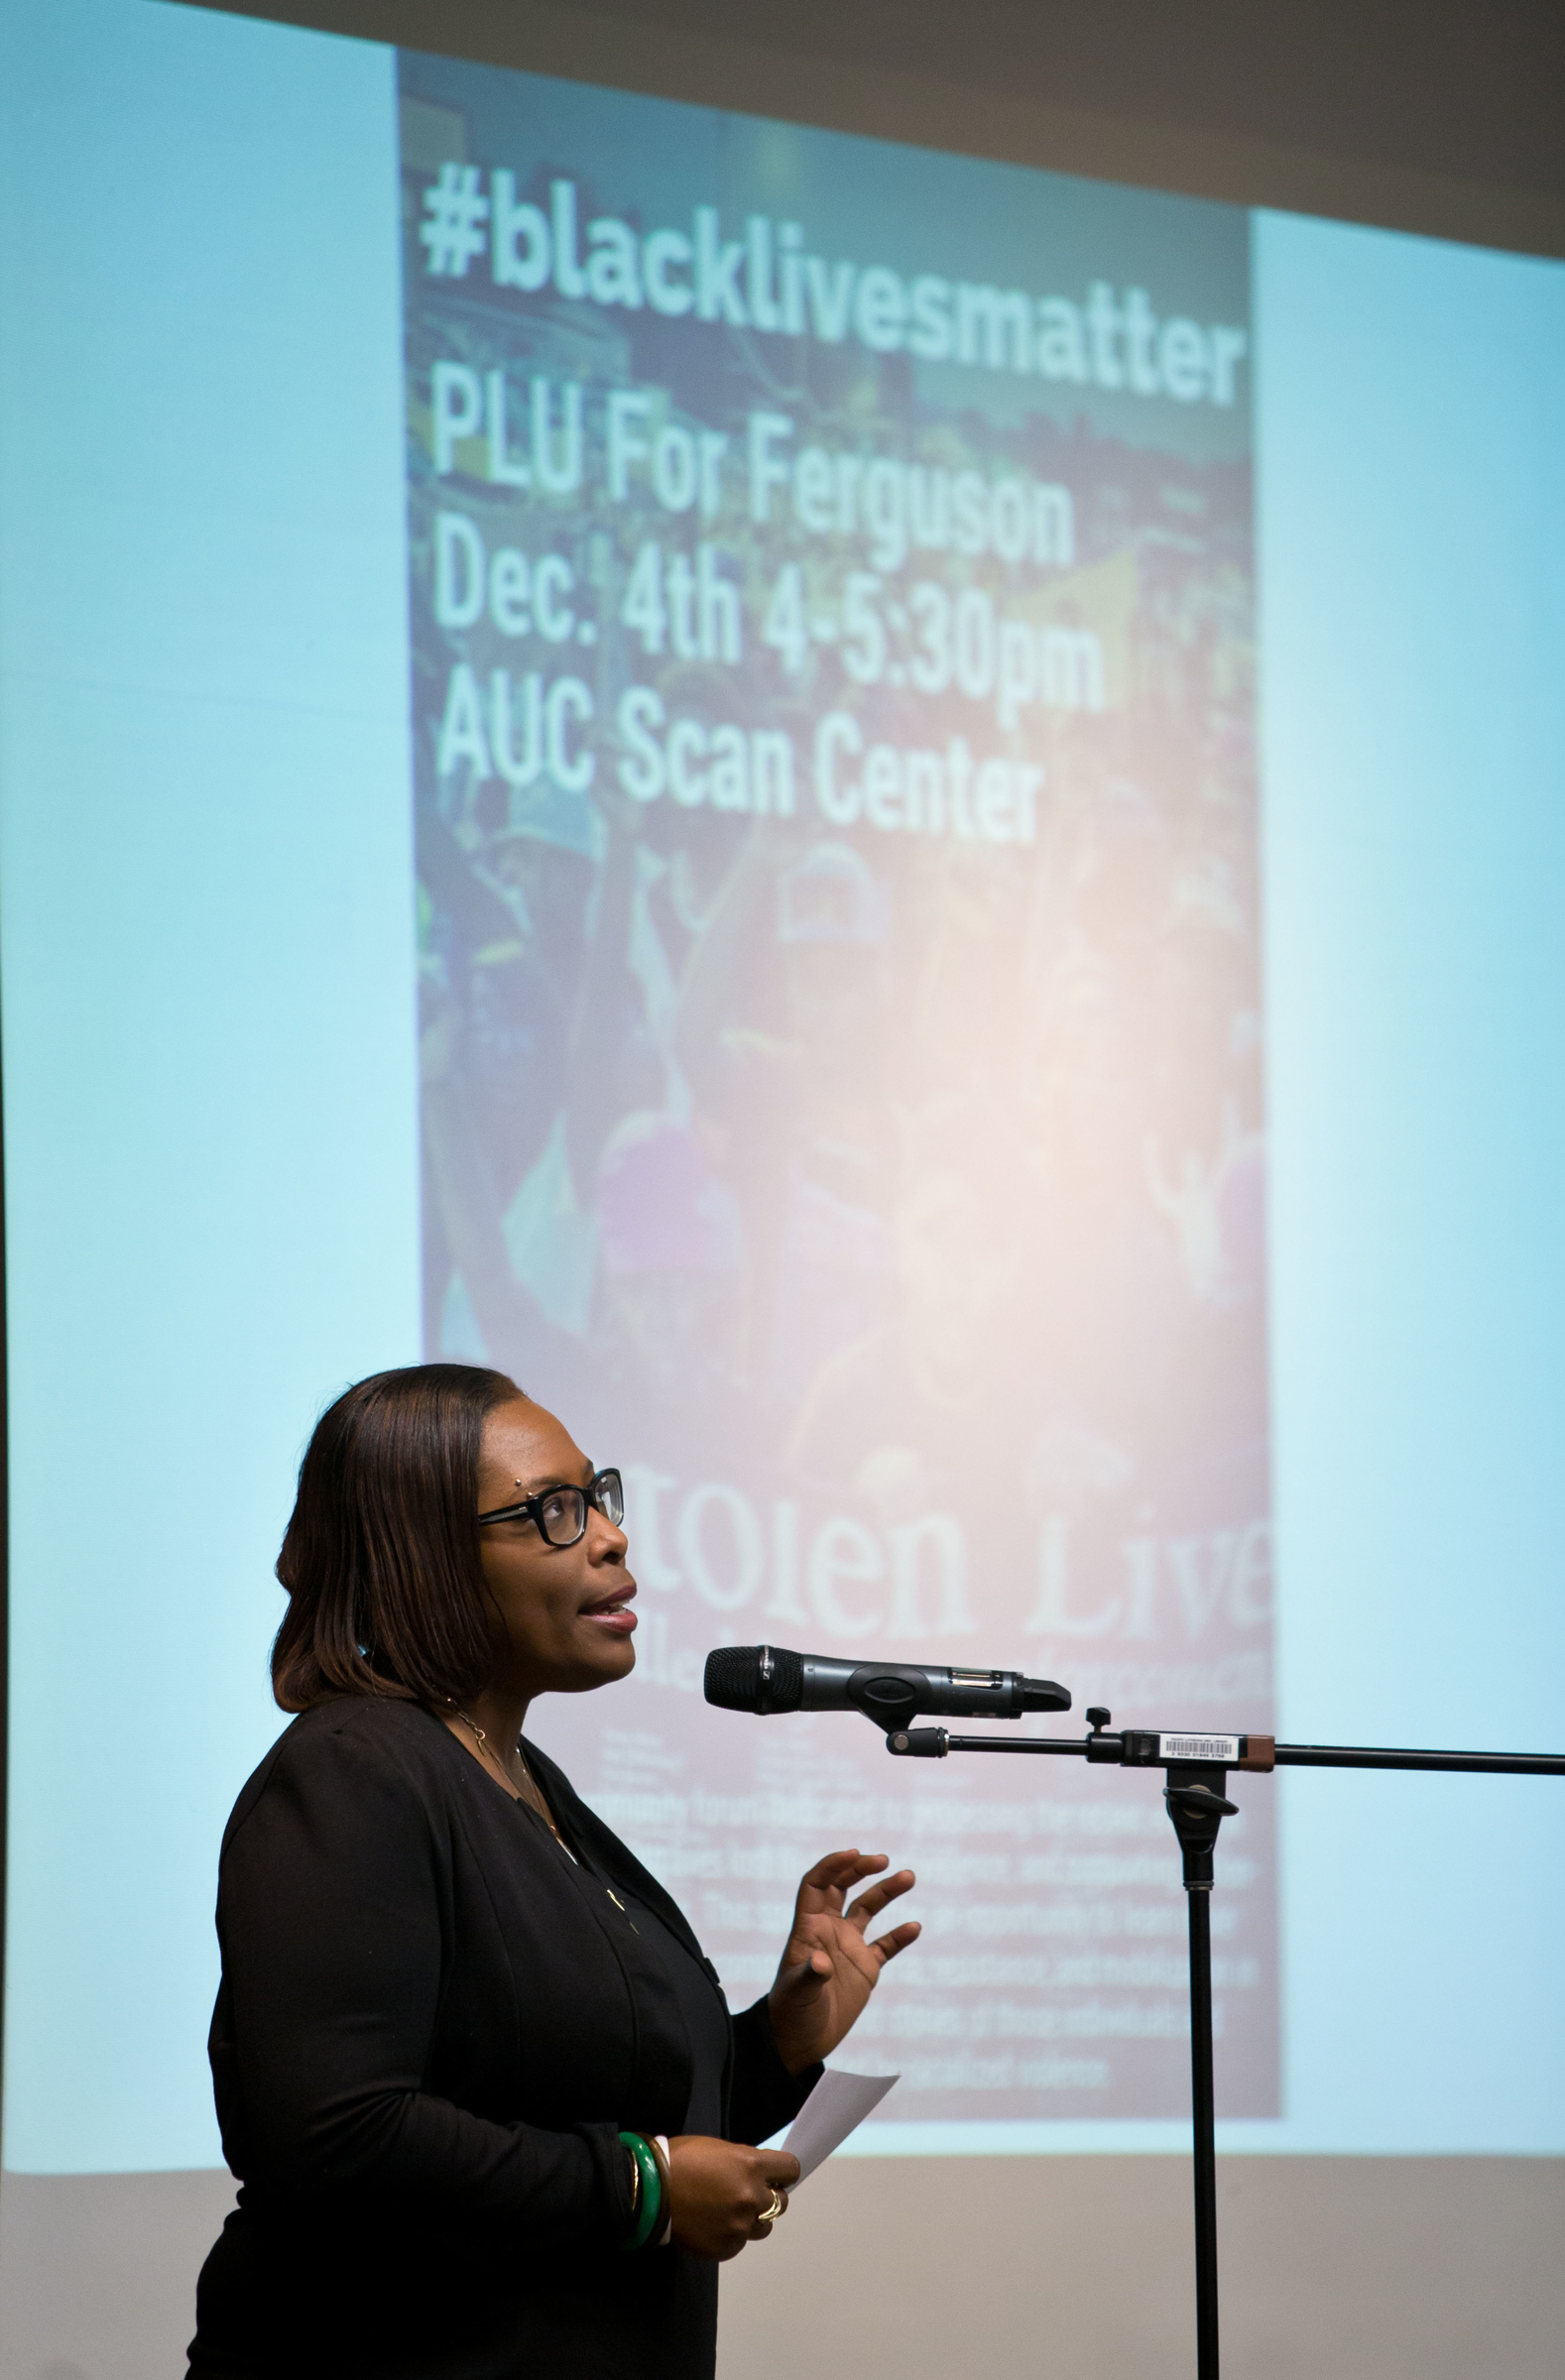 Diversity Center Director Angie Hambrick opens the Dec. 4 forum discussion. (Photo: John Froschauer/PLU)